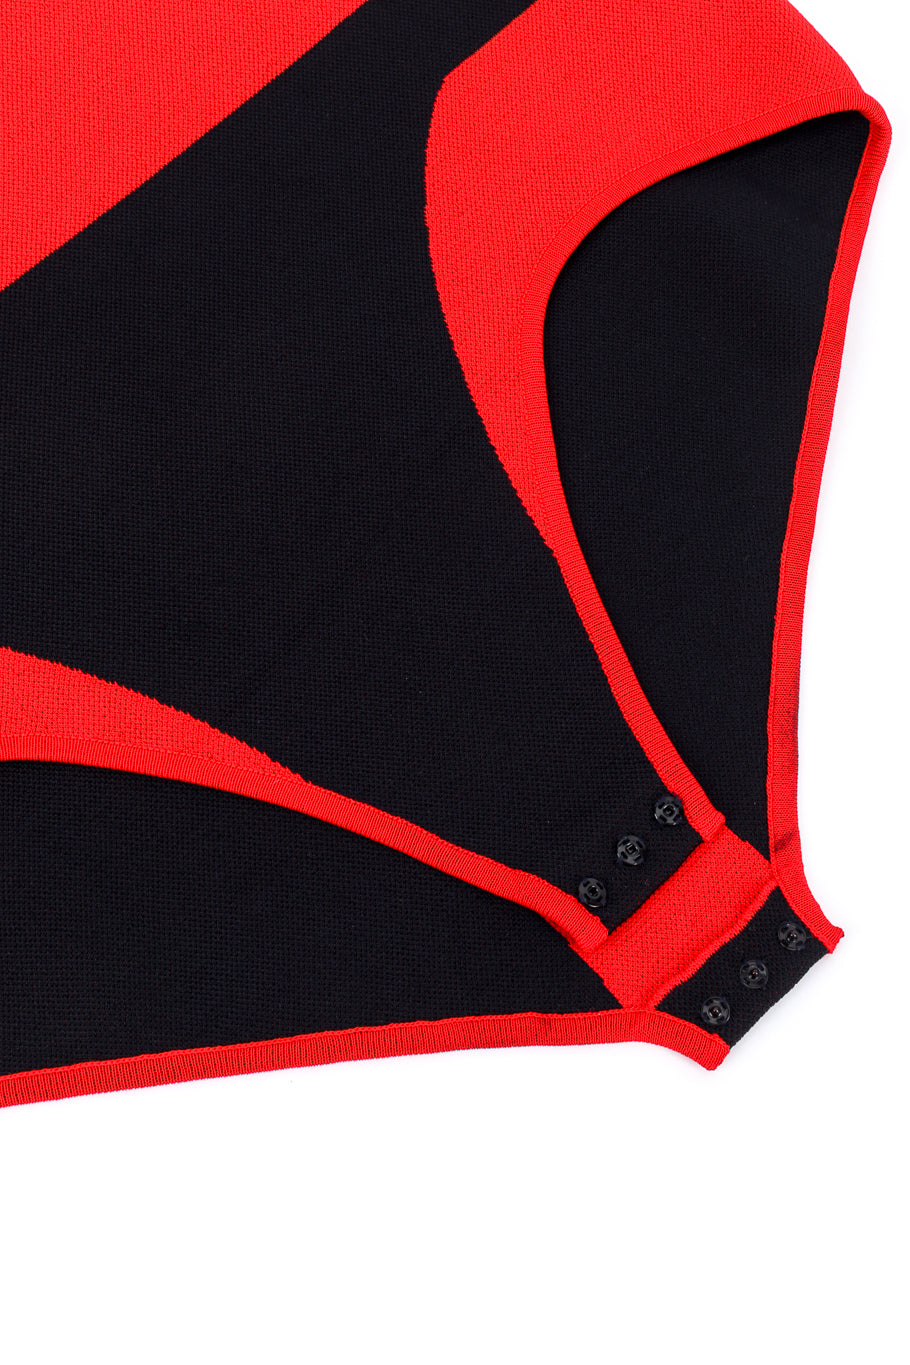 Rudi Gernreich Bikini Knit Bodysuit bottom closure @recess la